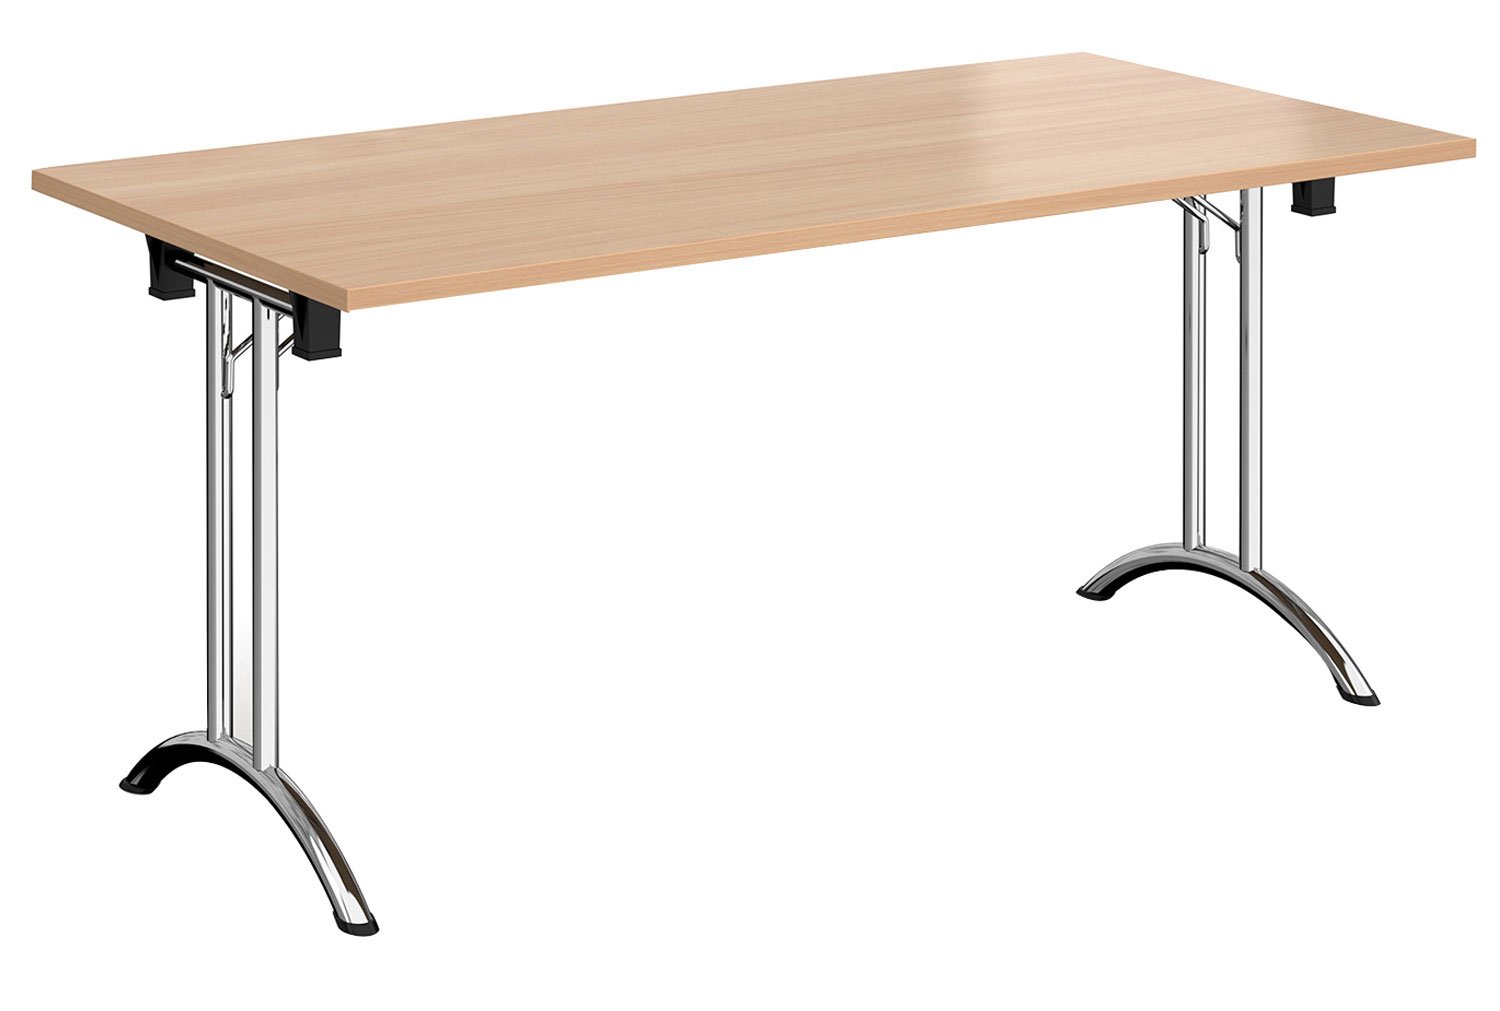 Blaga Rectangular Folding Table, 160wx80dx73h (cm), Beech